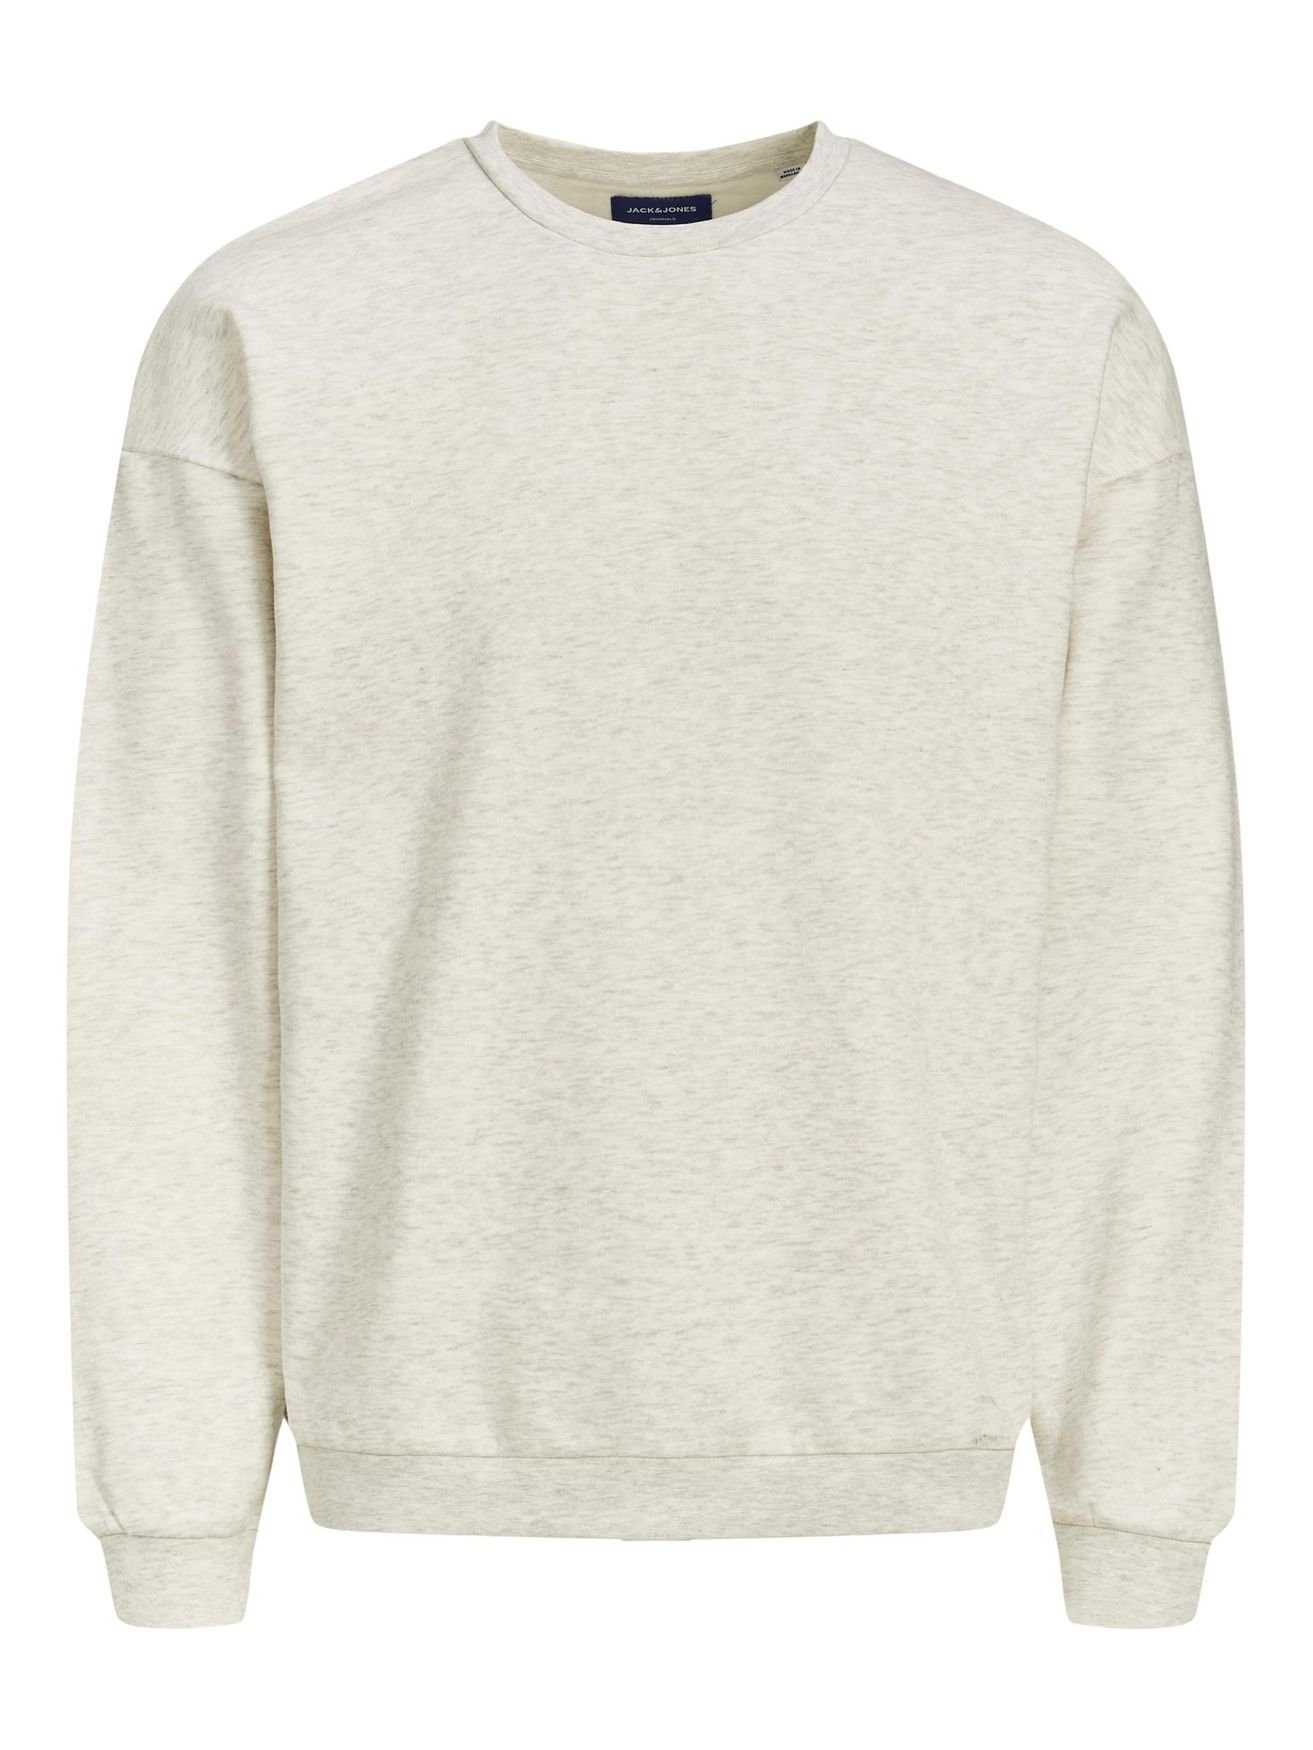 Übergröße JJEBASIC Size Sweatshirt Hellgrau in Plus Pullover Sweater & Jack Jones Basic Sweatshirt 4521